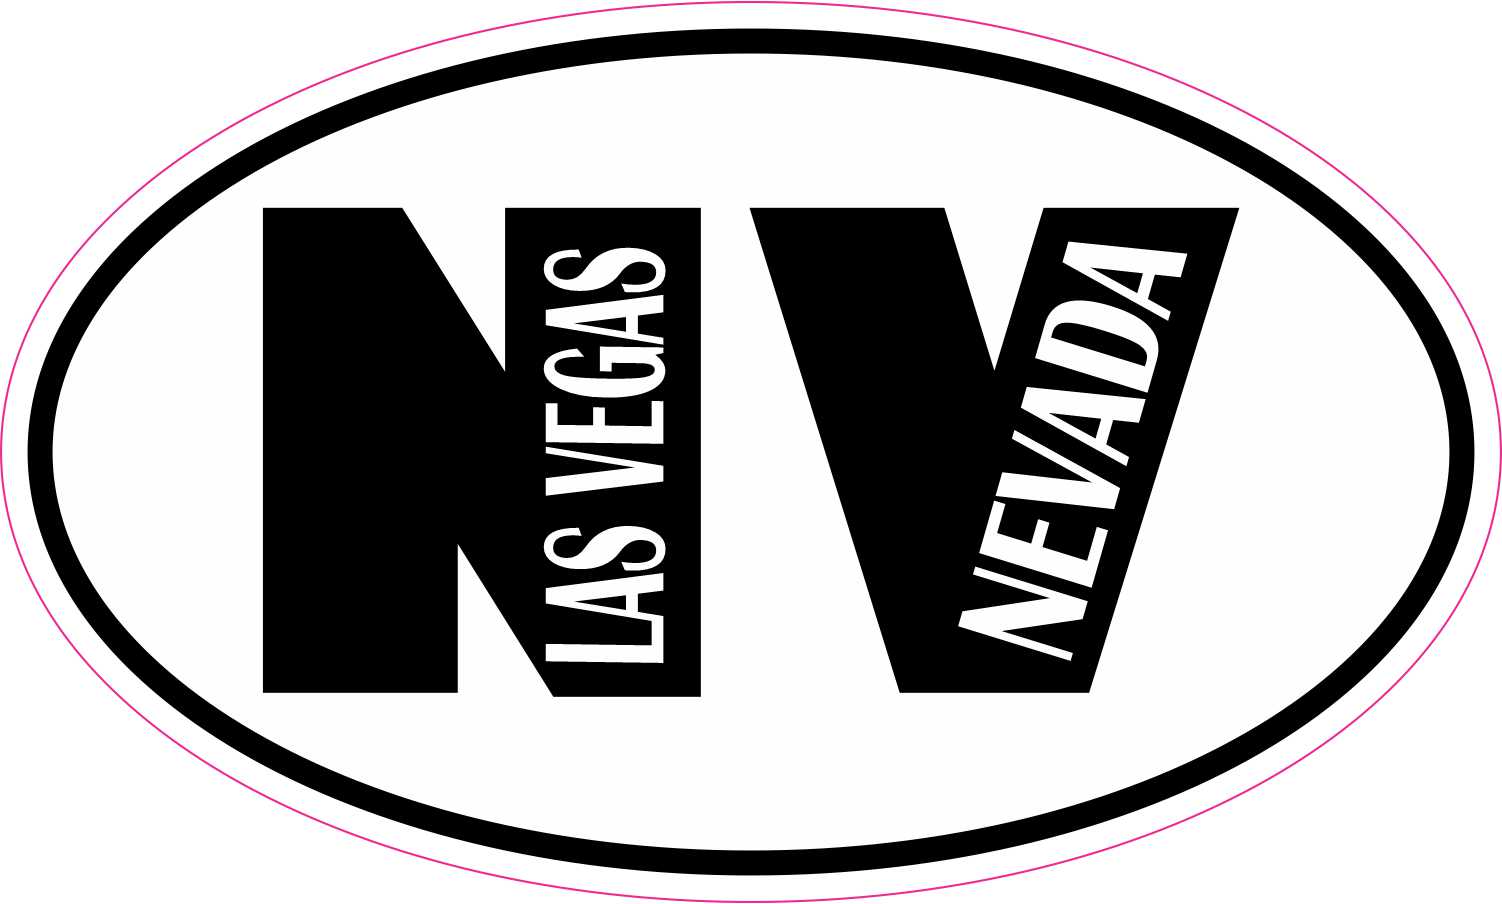 Las Vegas (LV) Oval Bumper Sticker